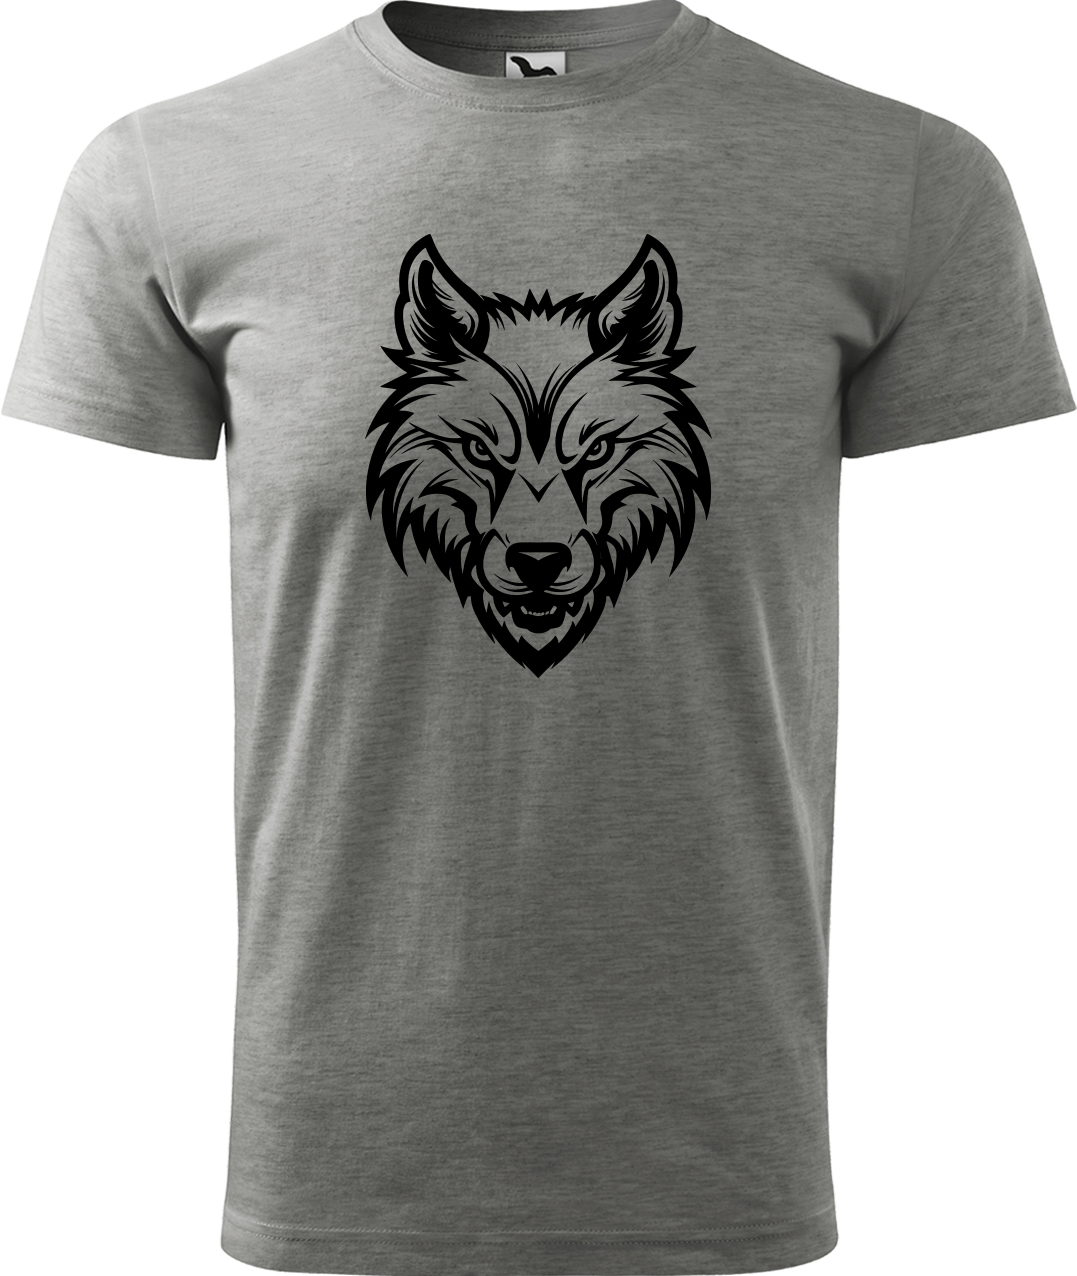 Pánské tričko s vlkem - Alfa samec Velikost: S, Barva: Tmavě šedý melír (12), Střih: pánský